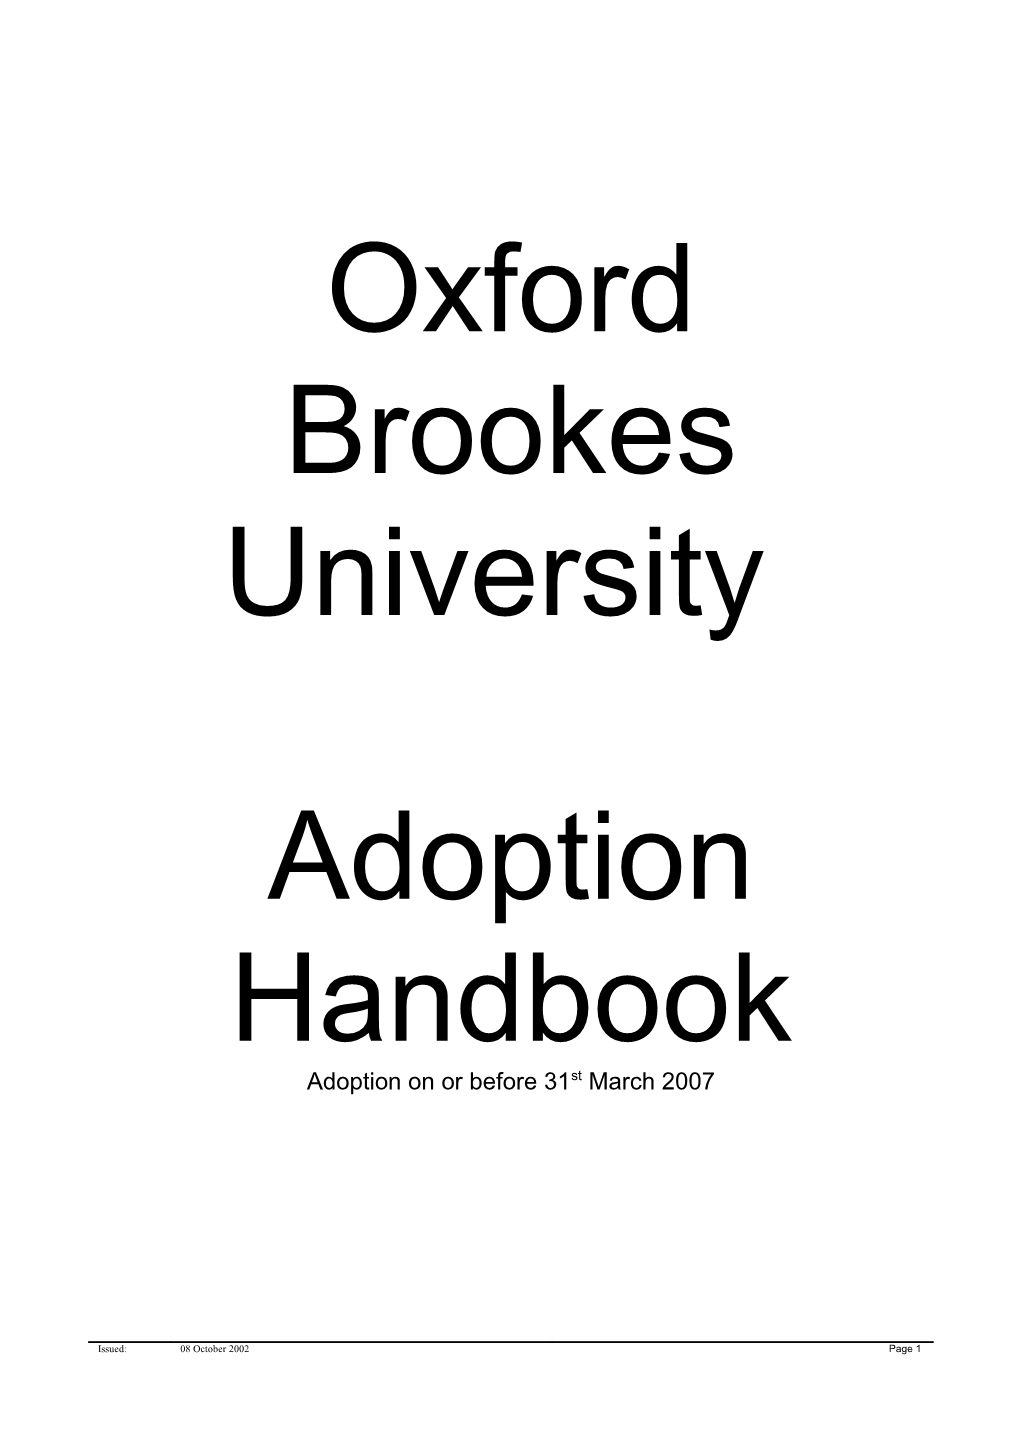 Summary of the University S Adoption Scheme